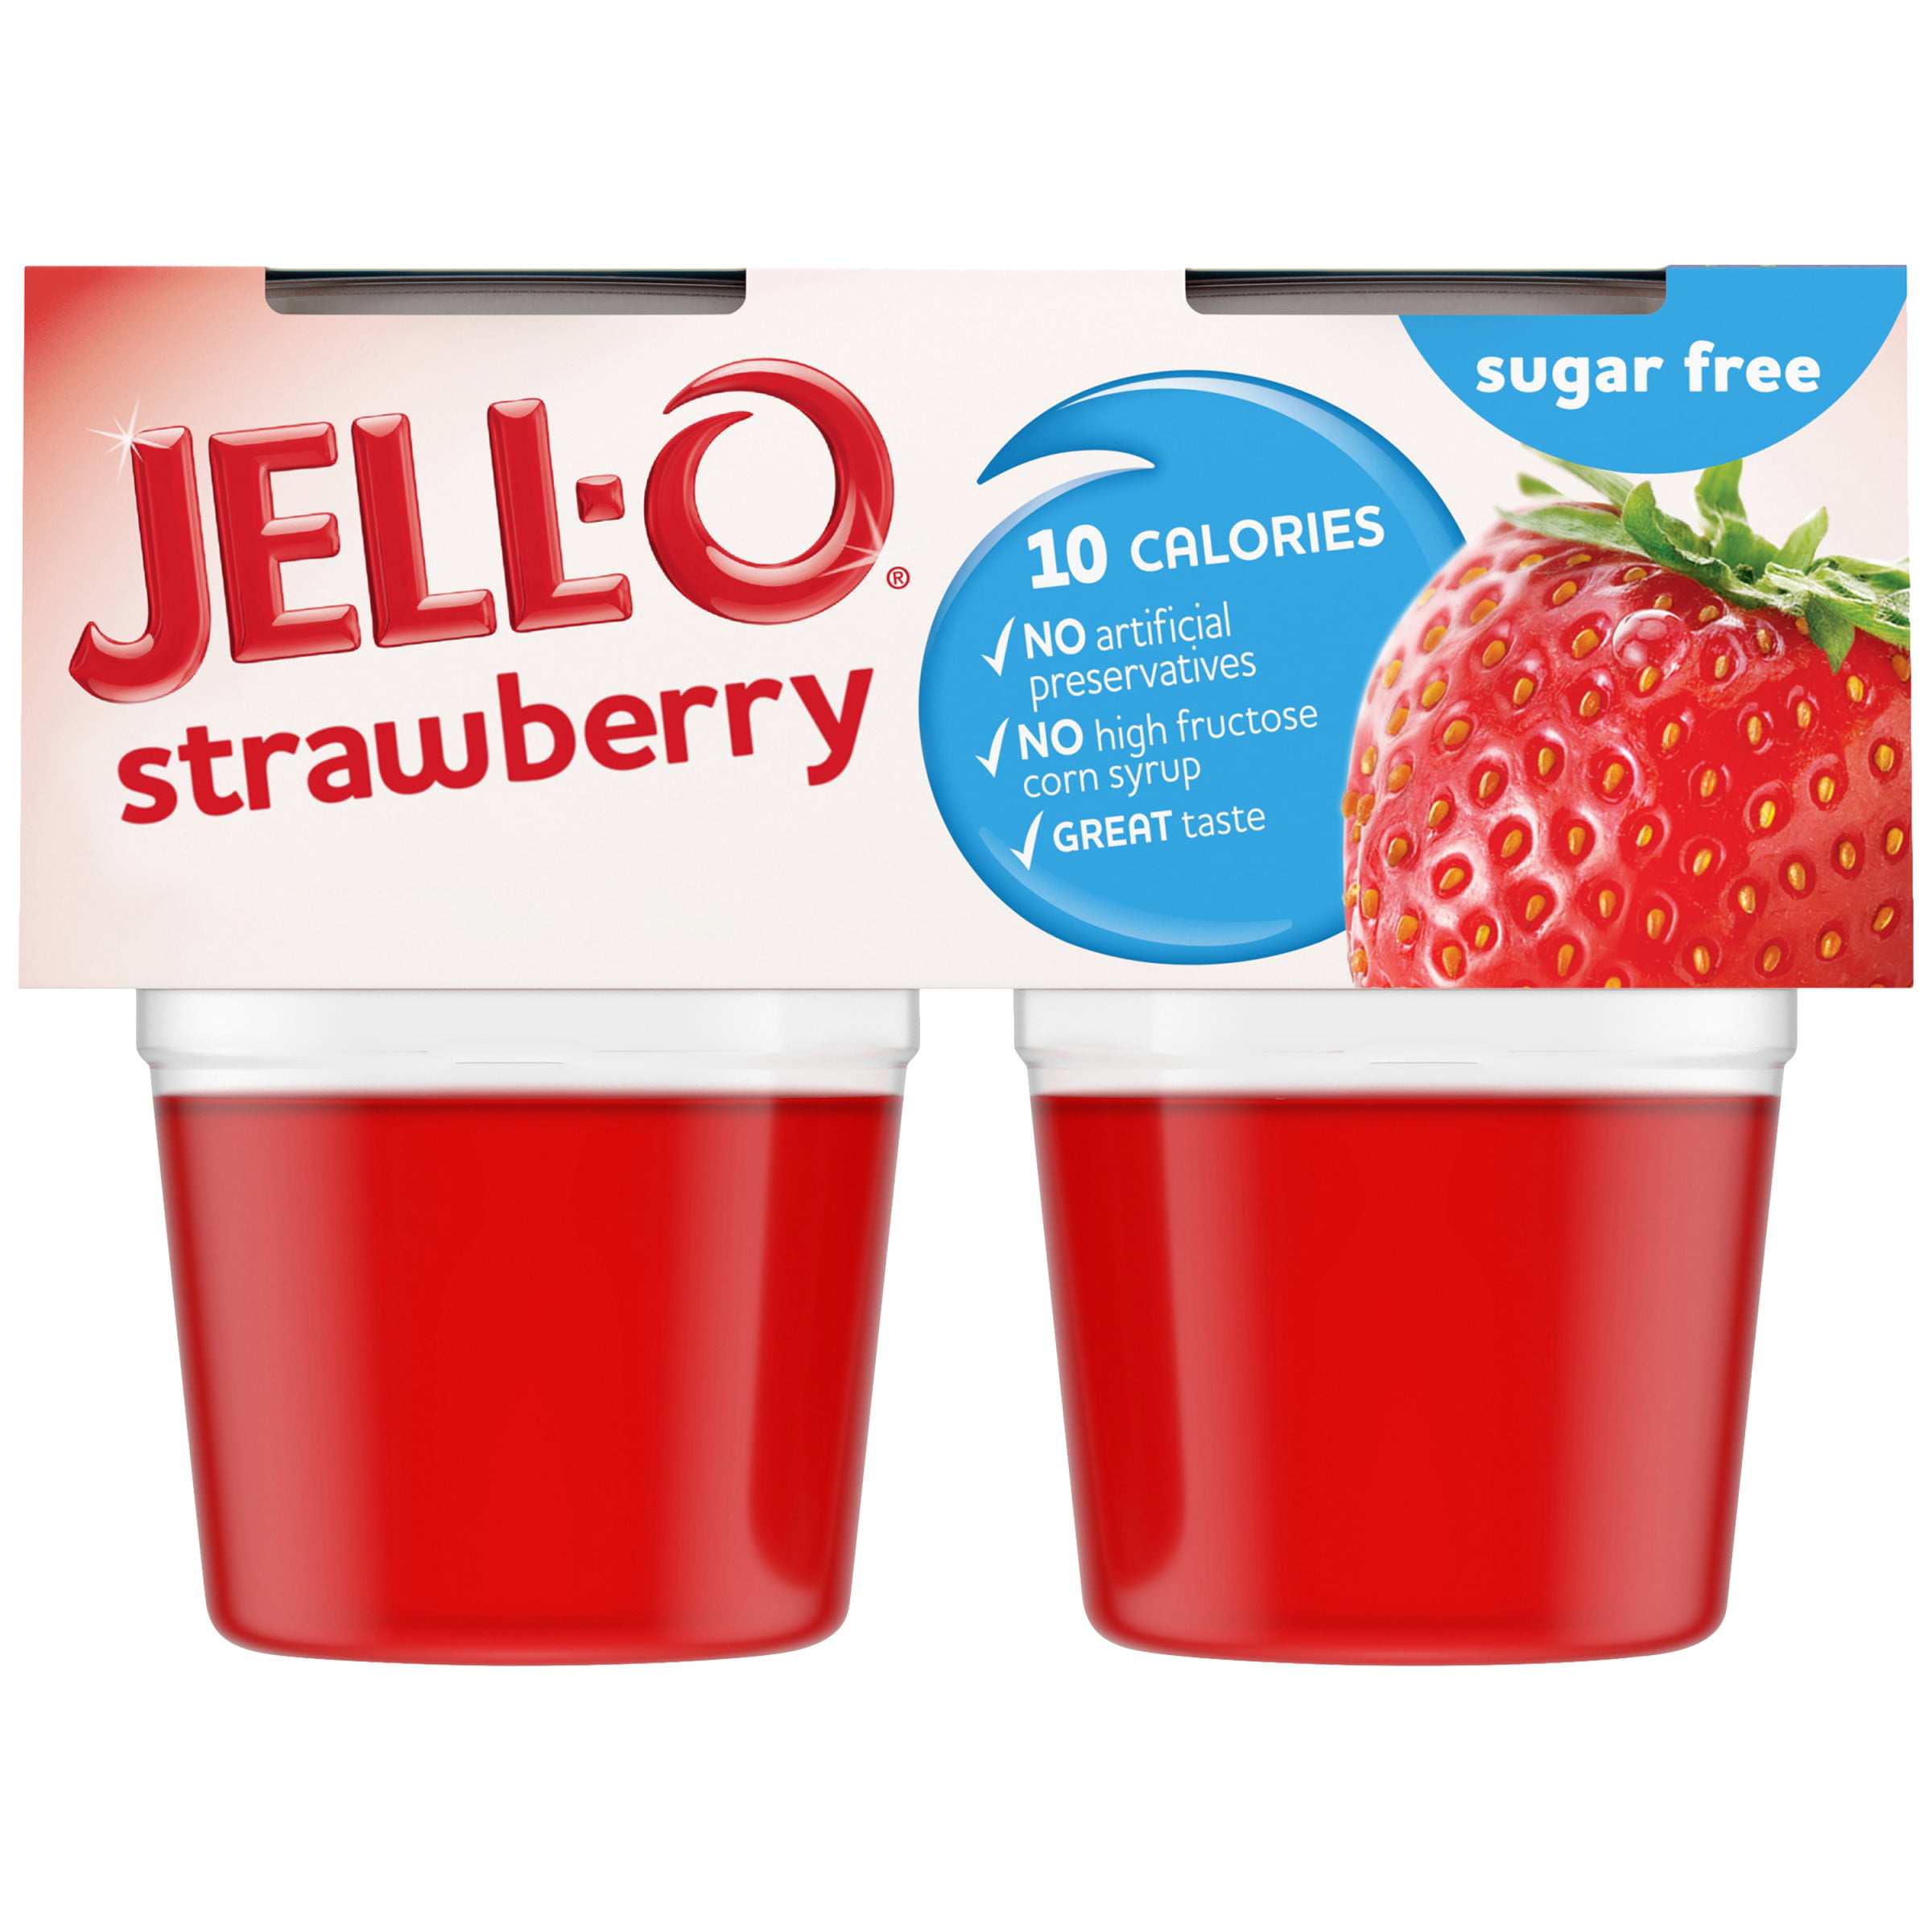 Jell O Strawberry Sugar Free Ready To Eat Gelatin Snacks 4 Ct Cups Walmart Com Walmart Com